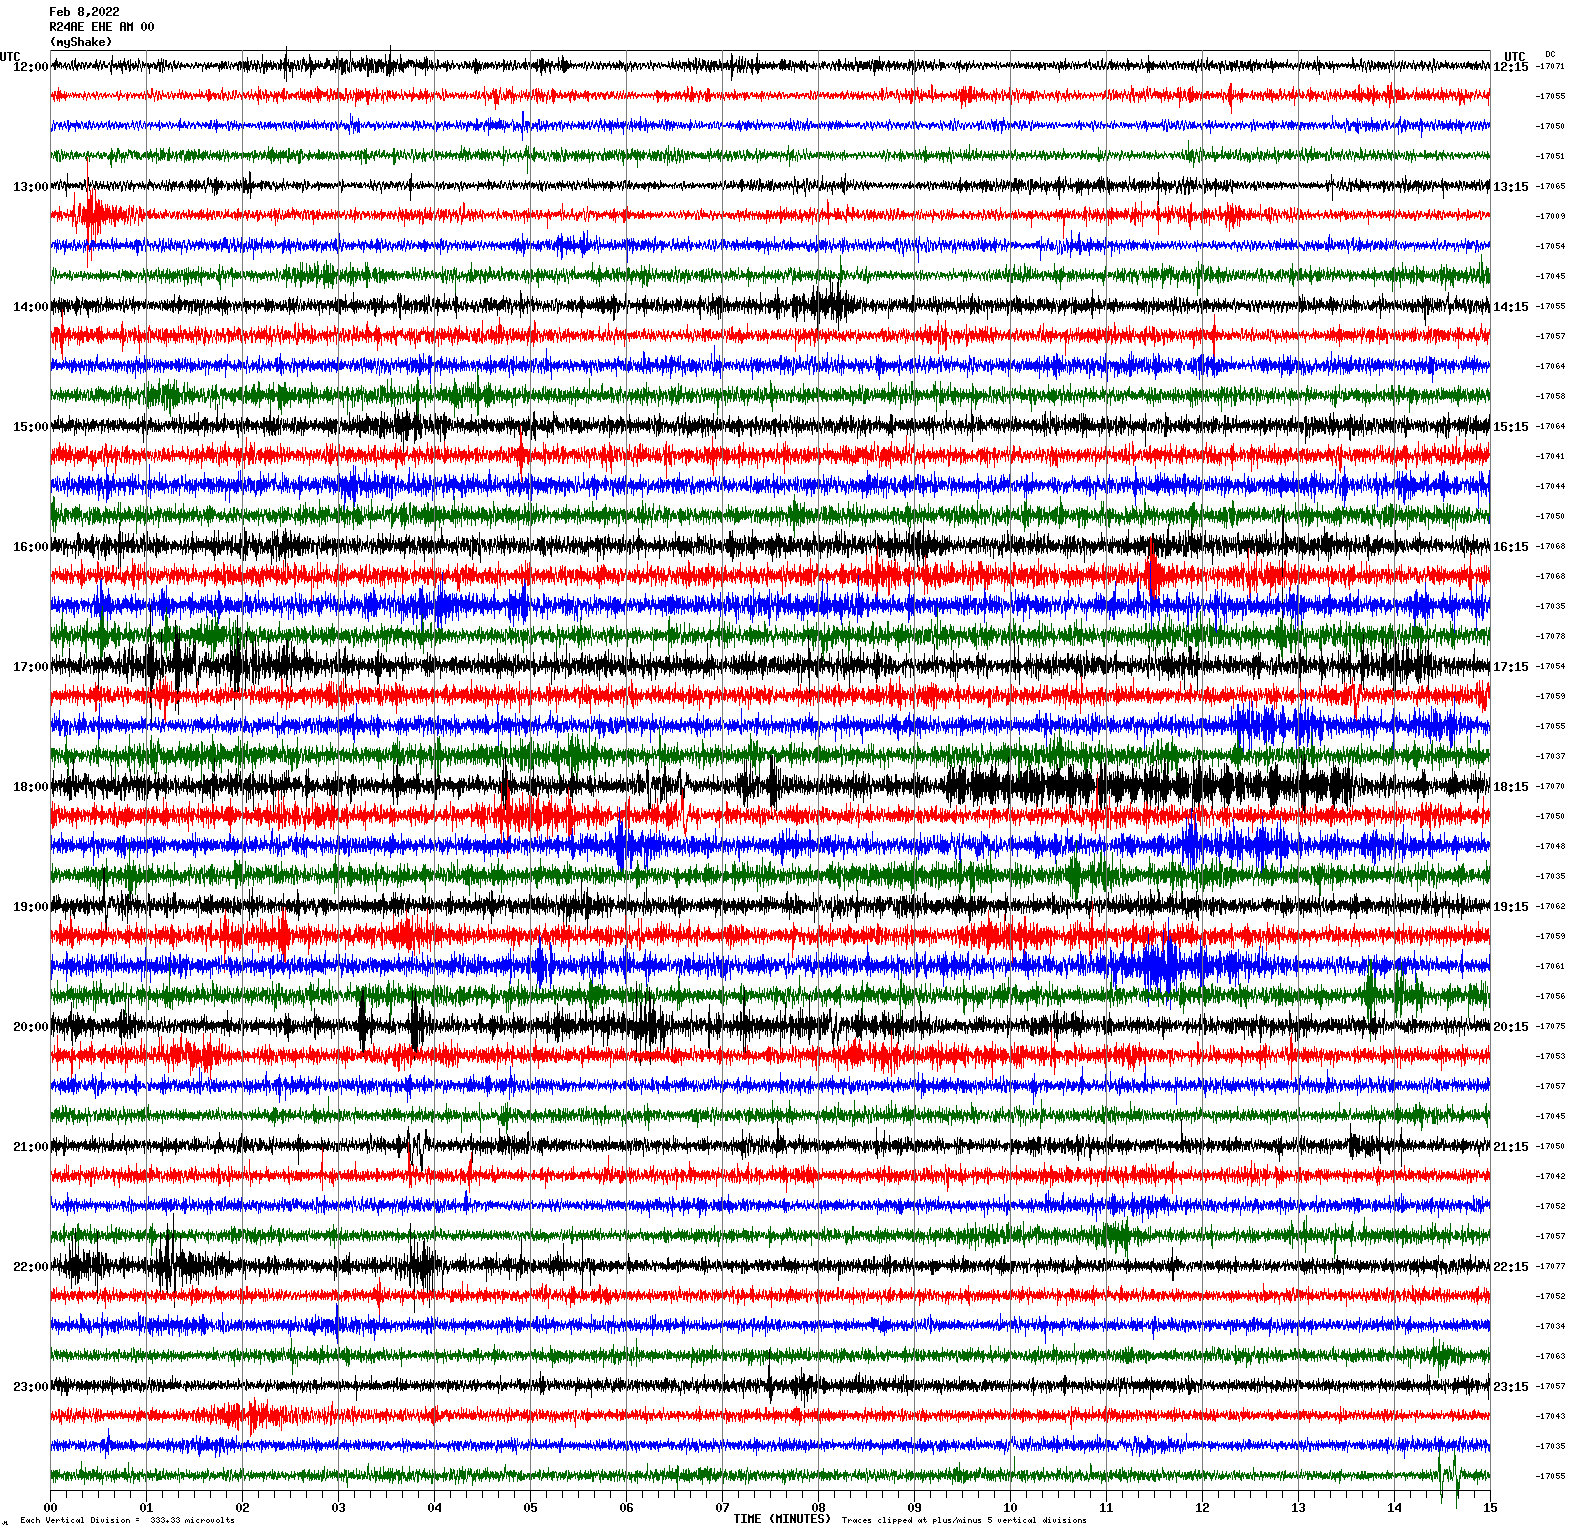 /seismic-data/R24AE/R24AE_EHE_AM_00.2022020812.gif